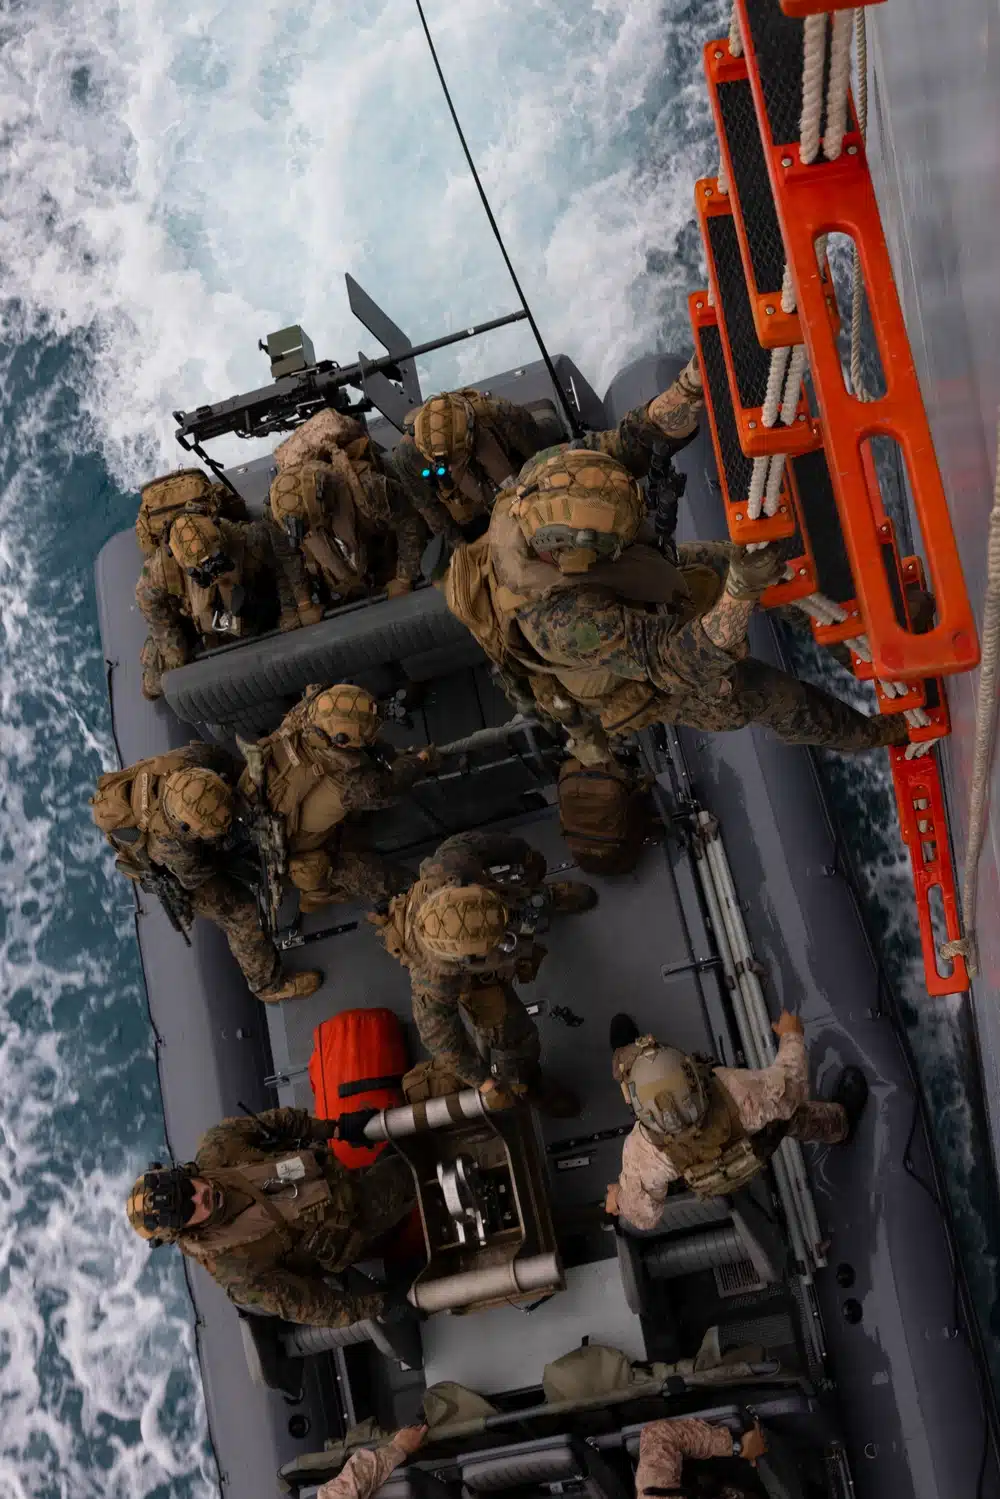 Recon Marines board a ship VBSS